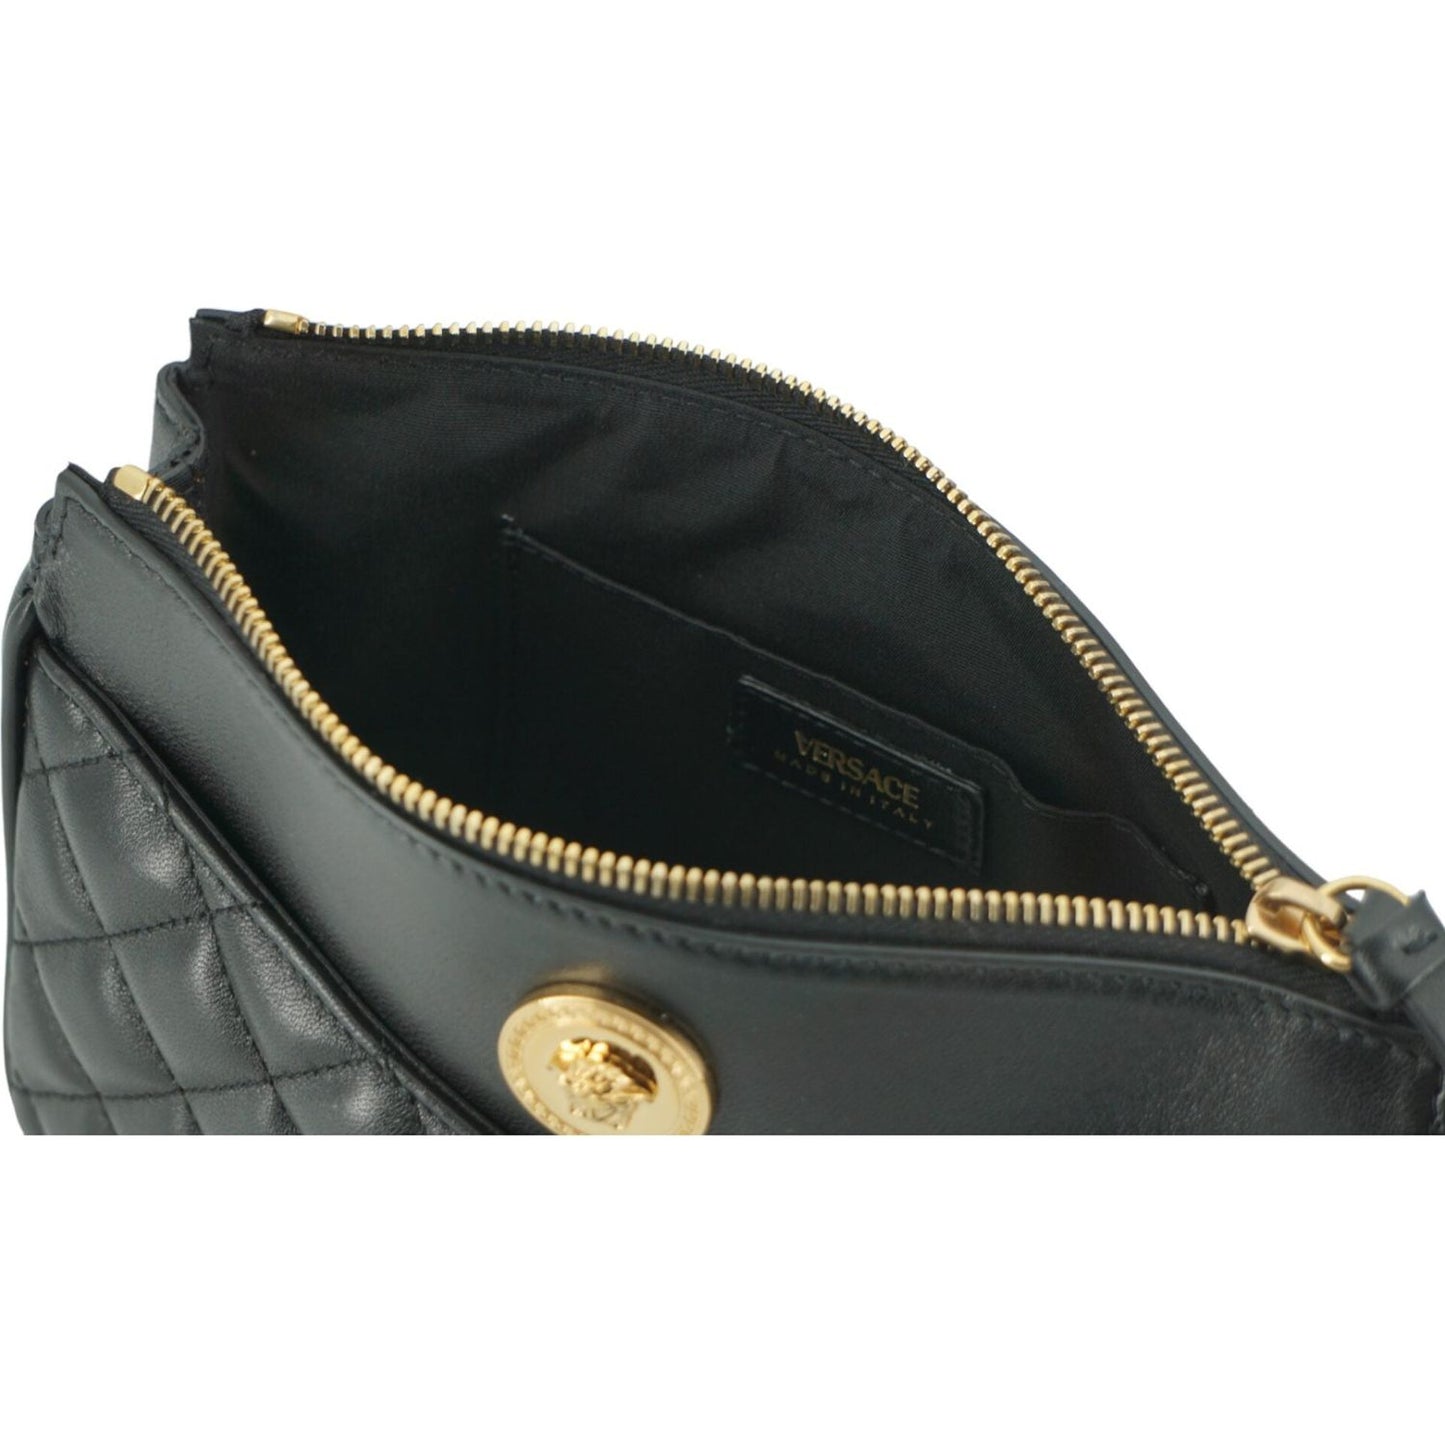 Versace Black Lamb Leather Pouch Crossbody Bag black-lamb-leather-pouch-crossbody-bag DSC01168-scaled-20a92c59-cd9.jpg